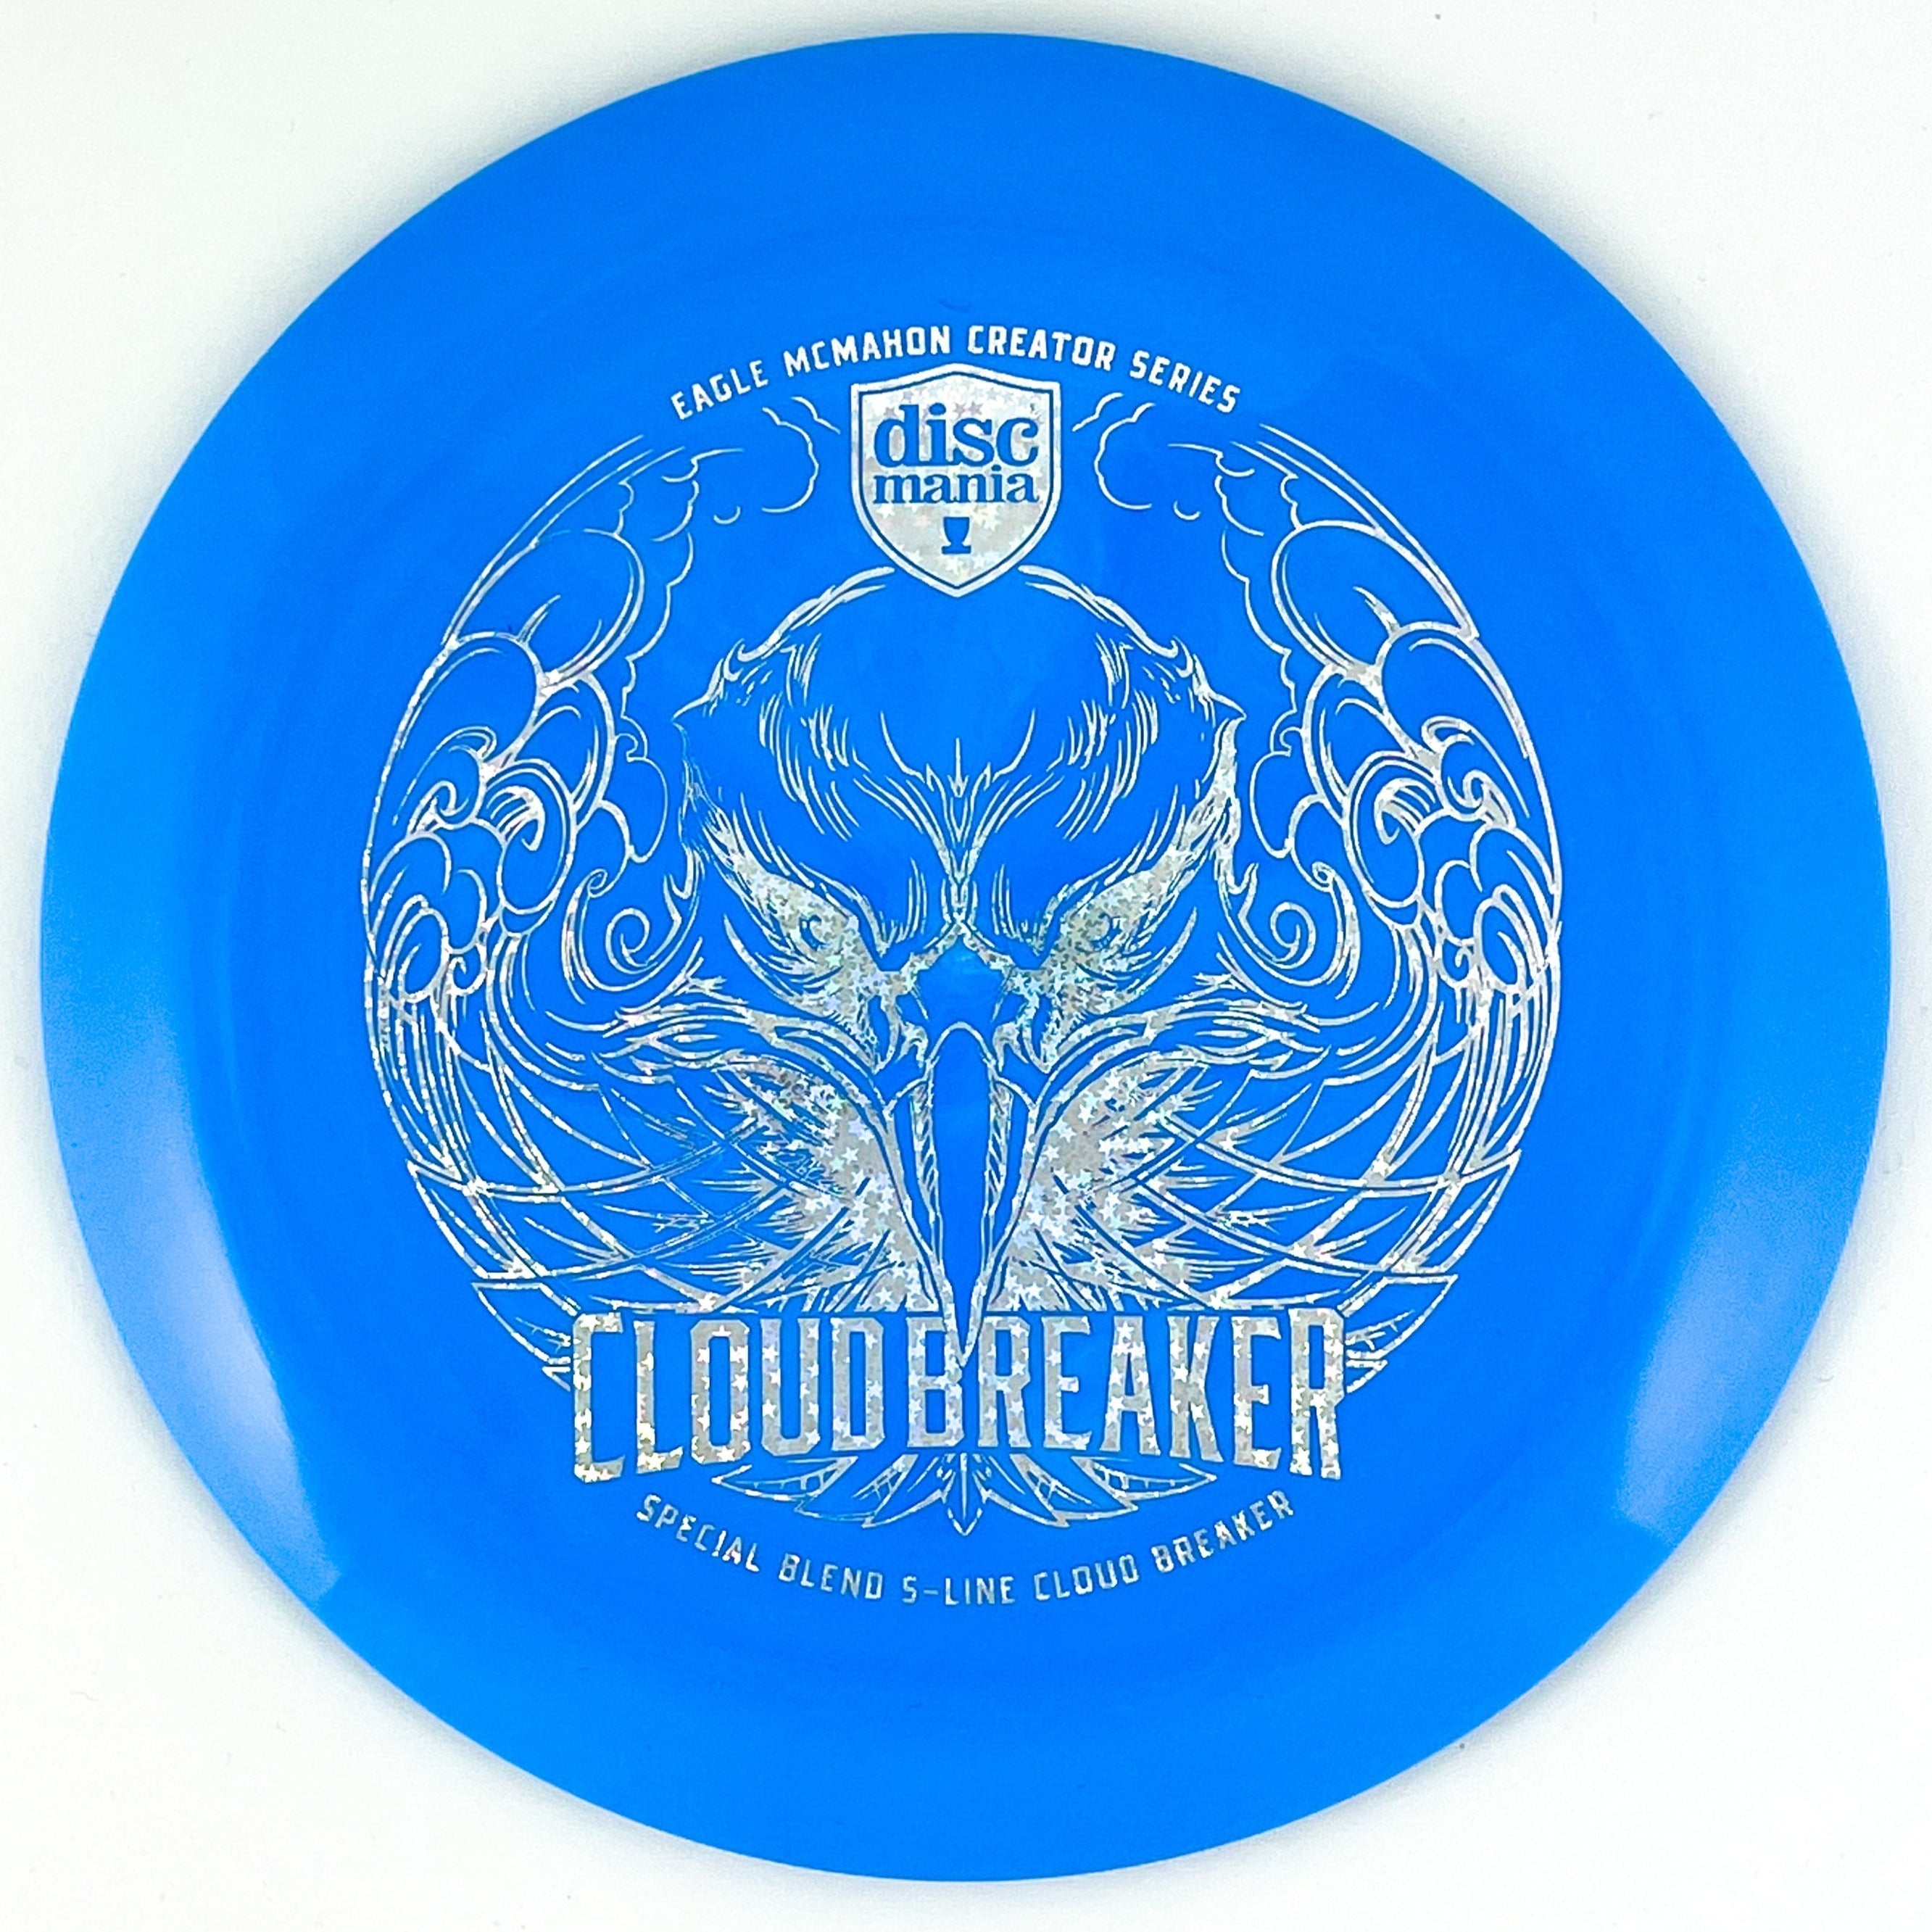 Blue Eagle McMahon Creator Series Cloud Breaker disc golf distance driver by Discmania Golf Discs.